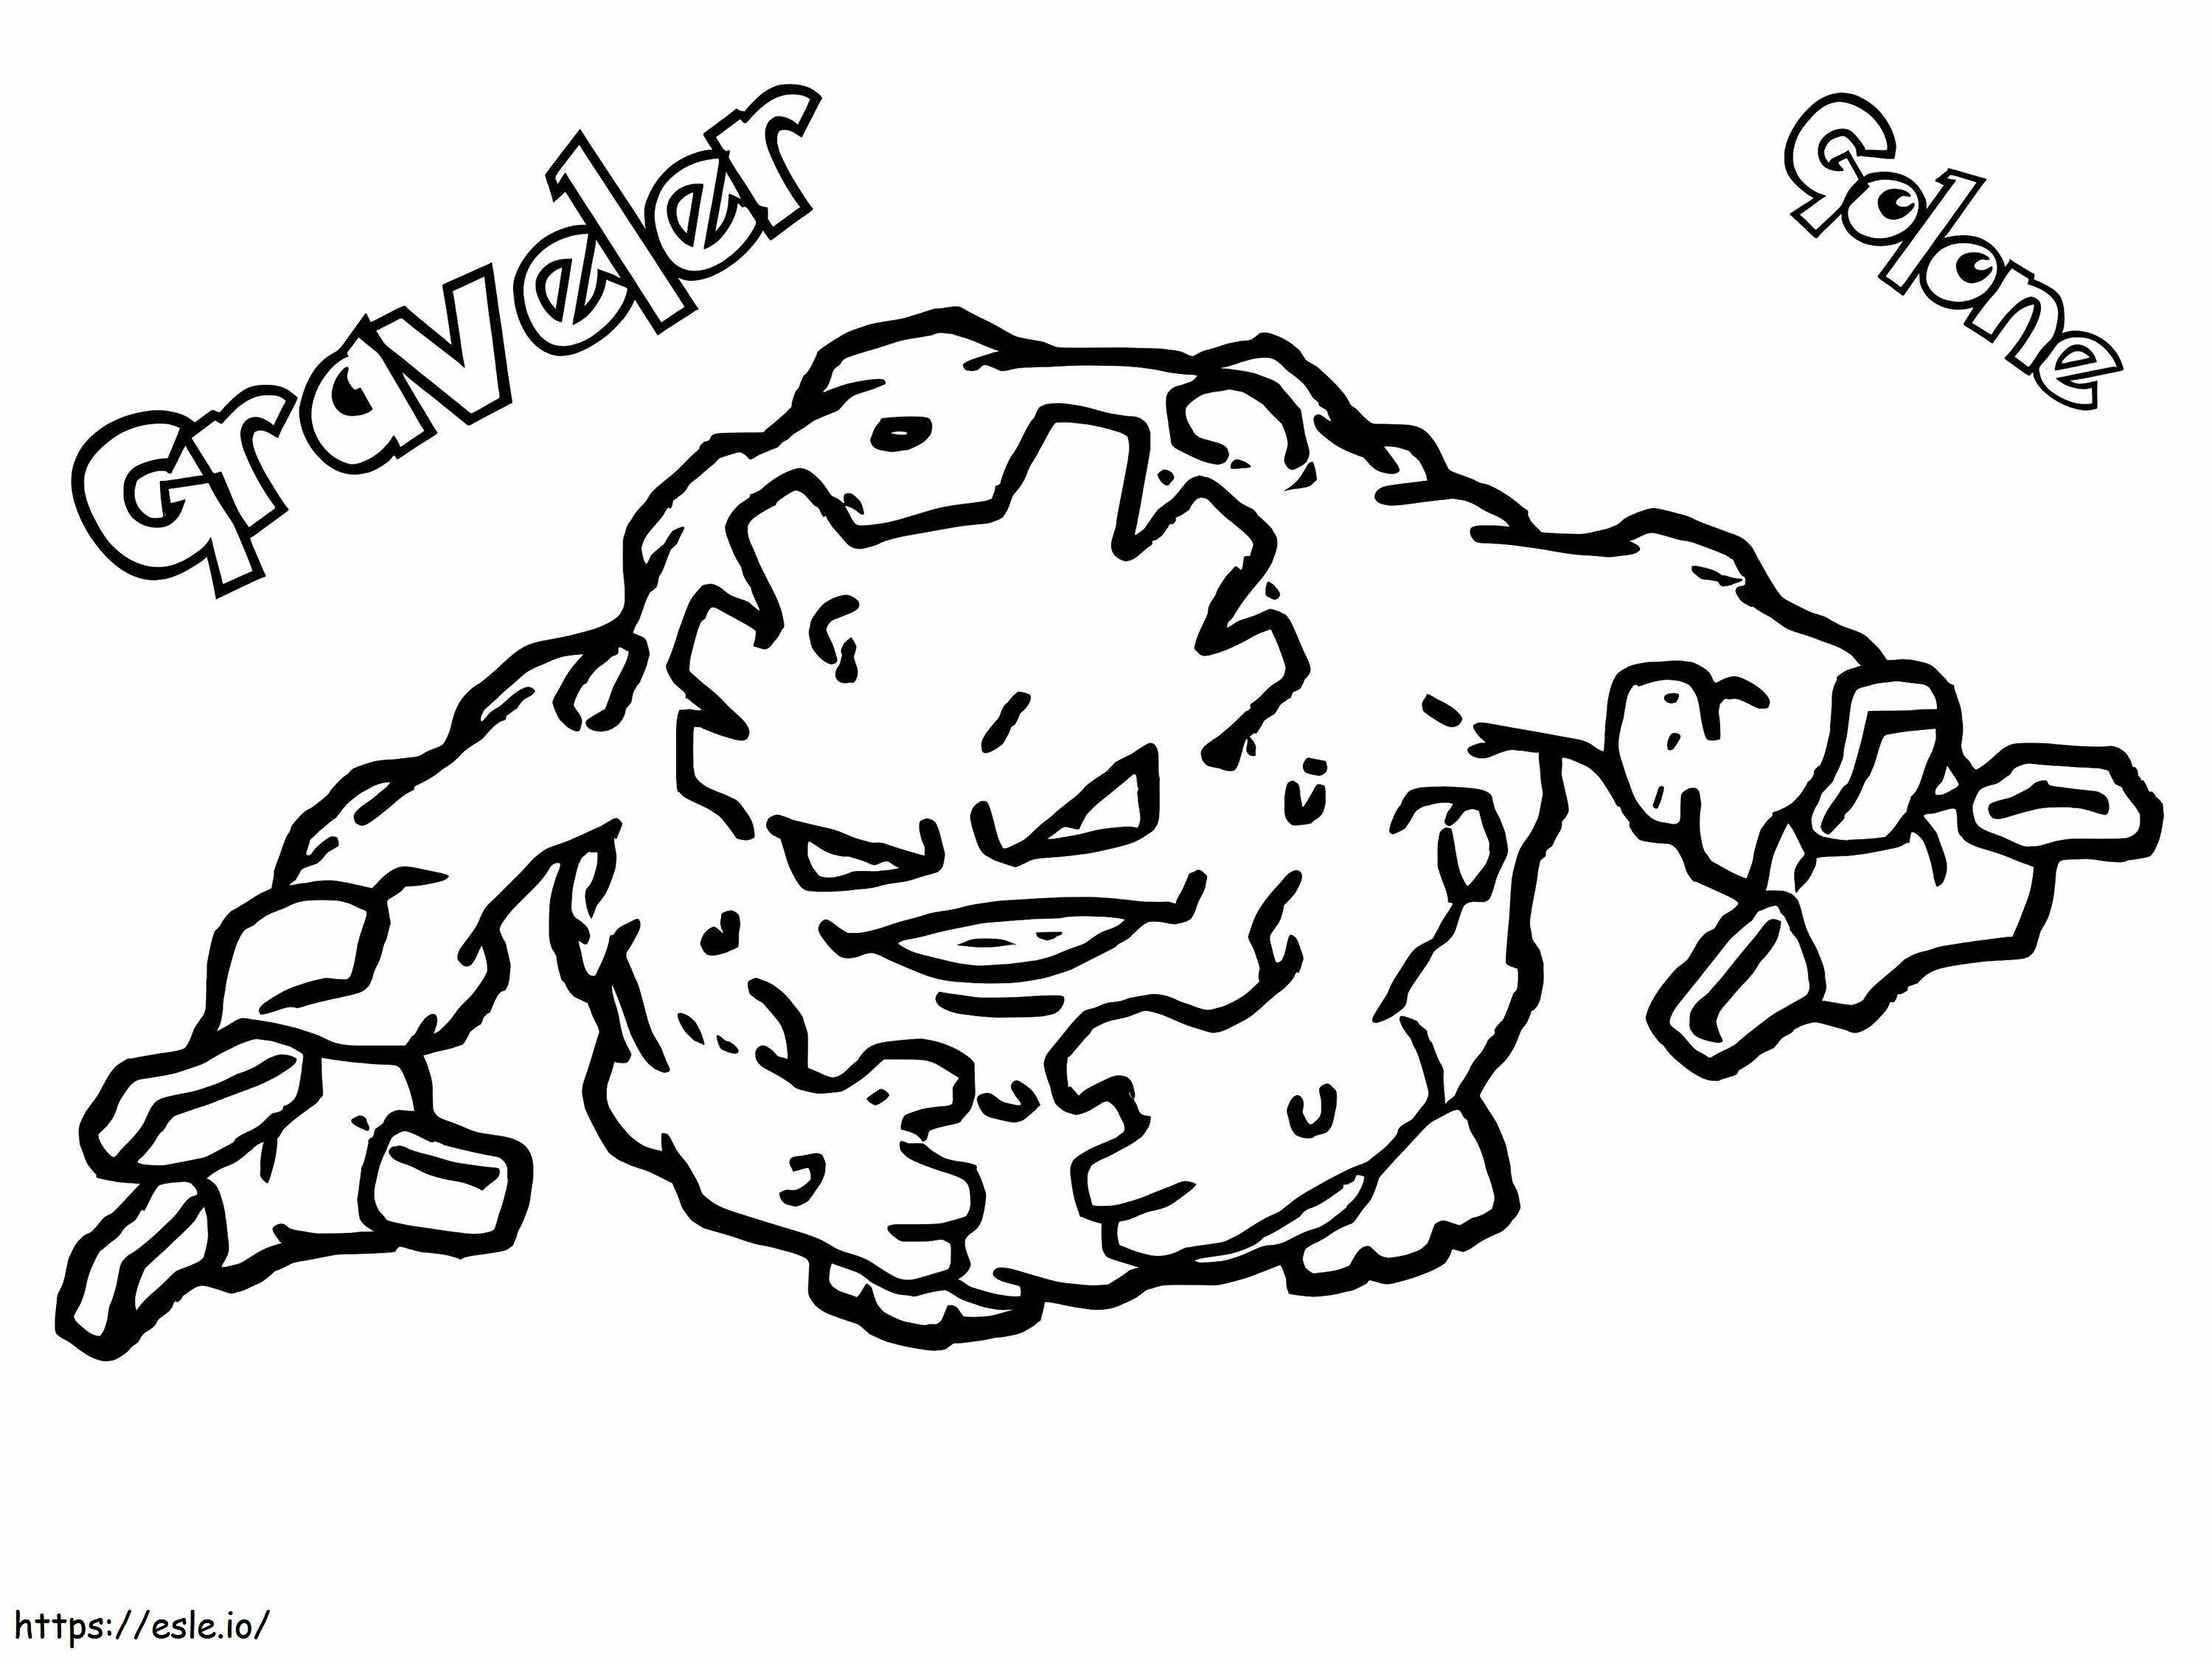 Pokemon Graveler coloring page